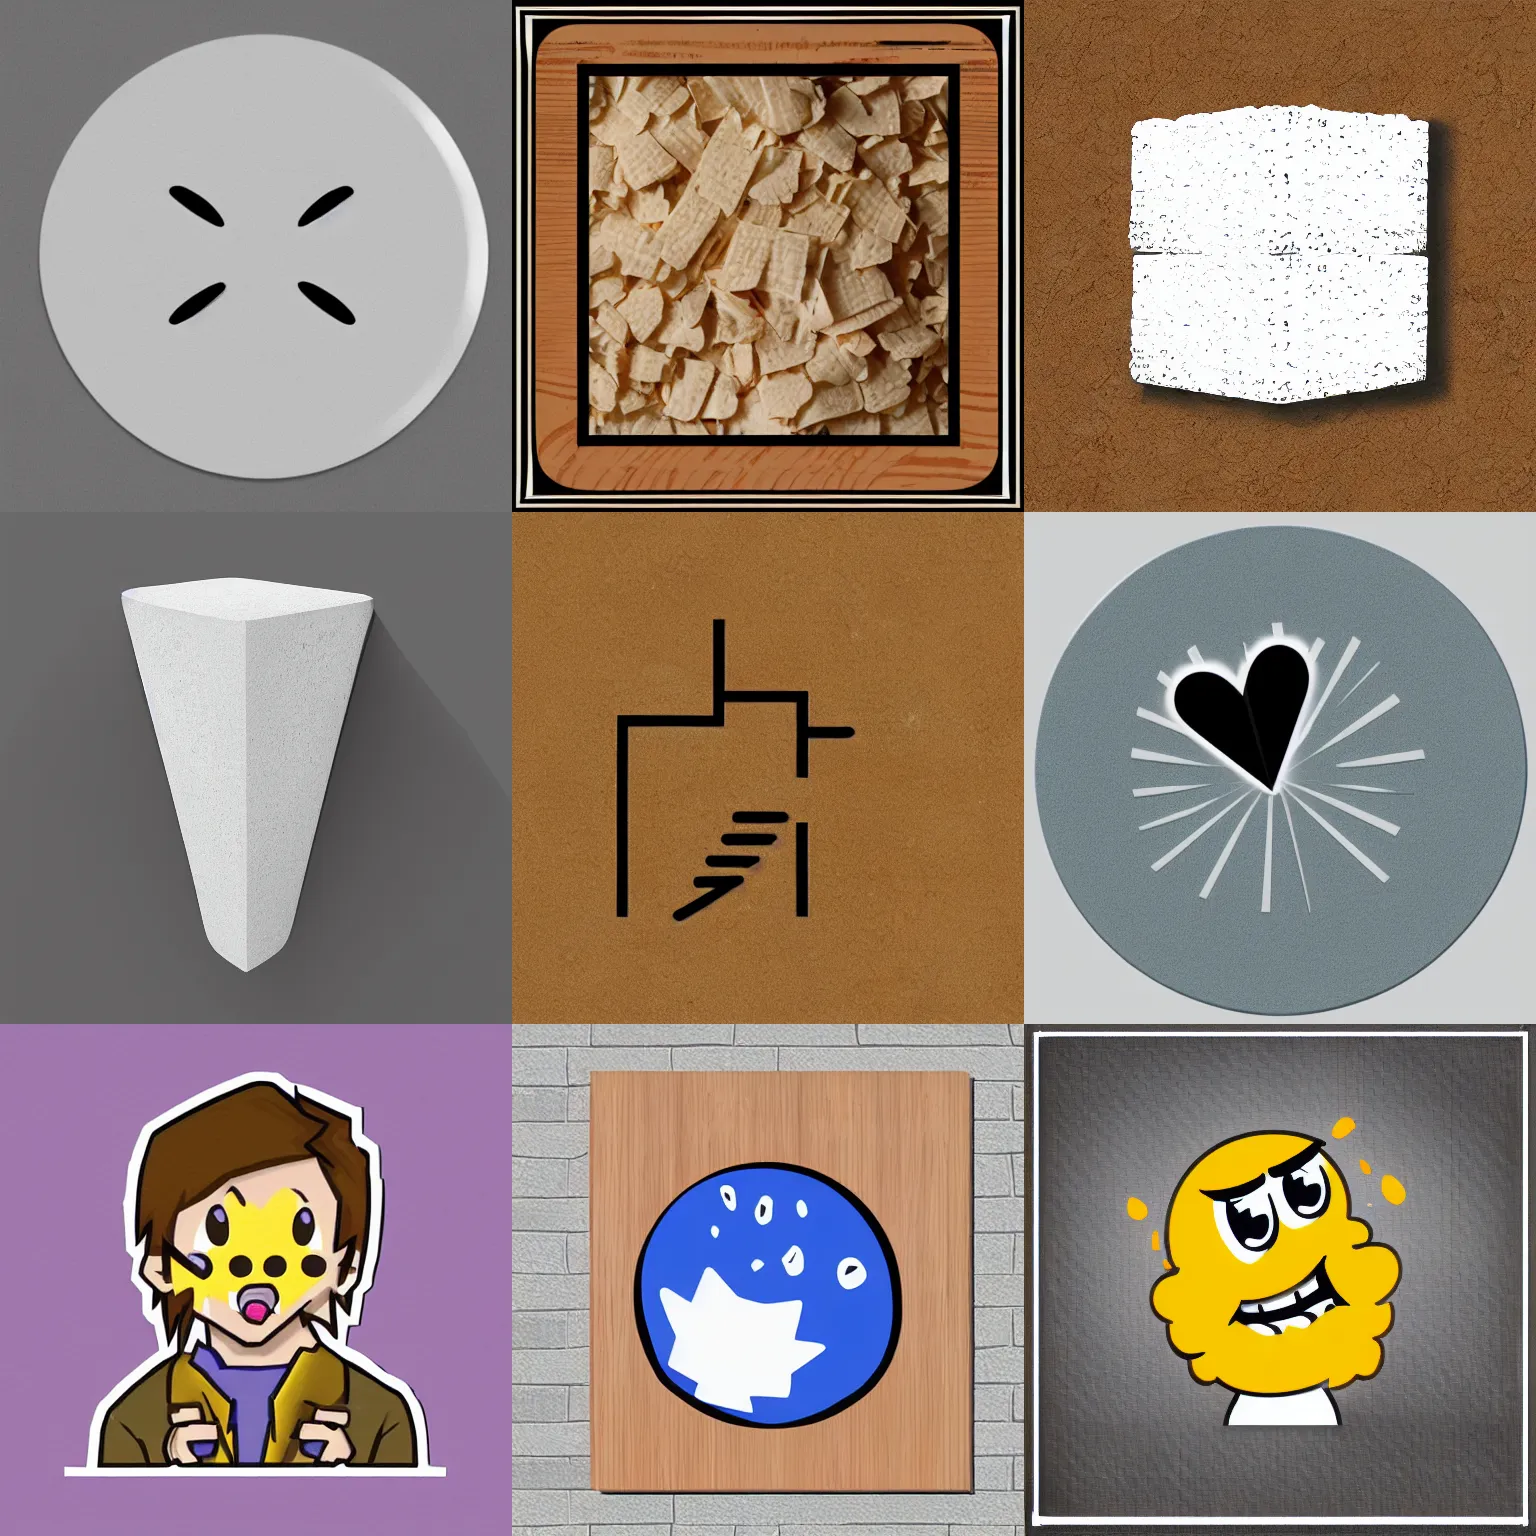 ArtStation - Pixel discord emotes